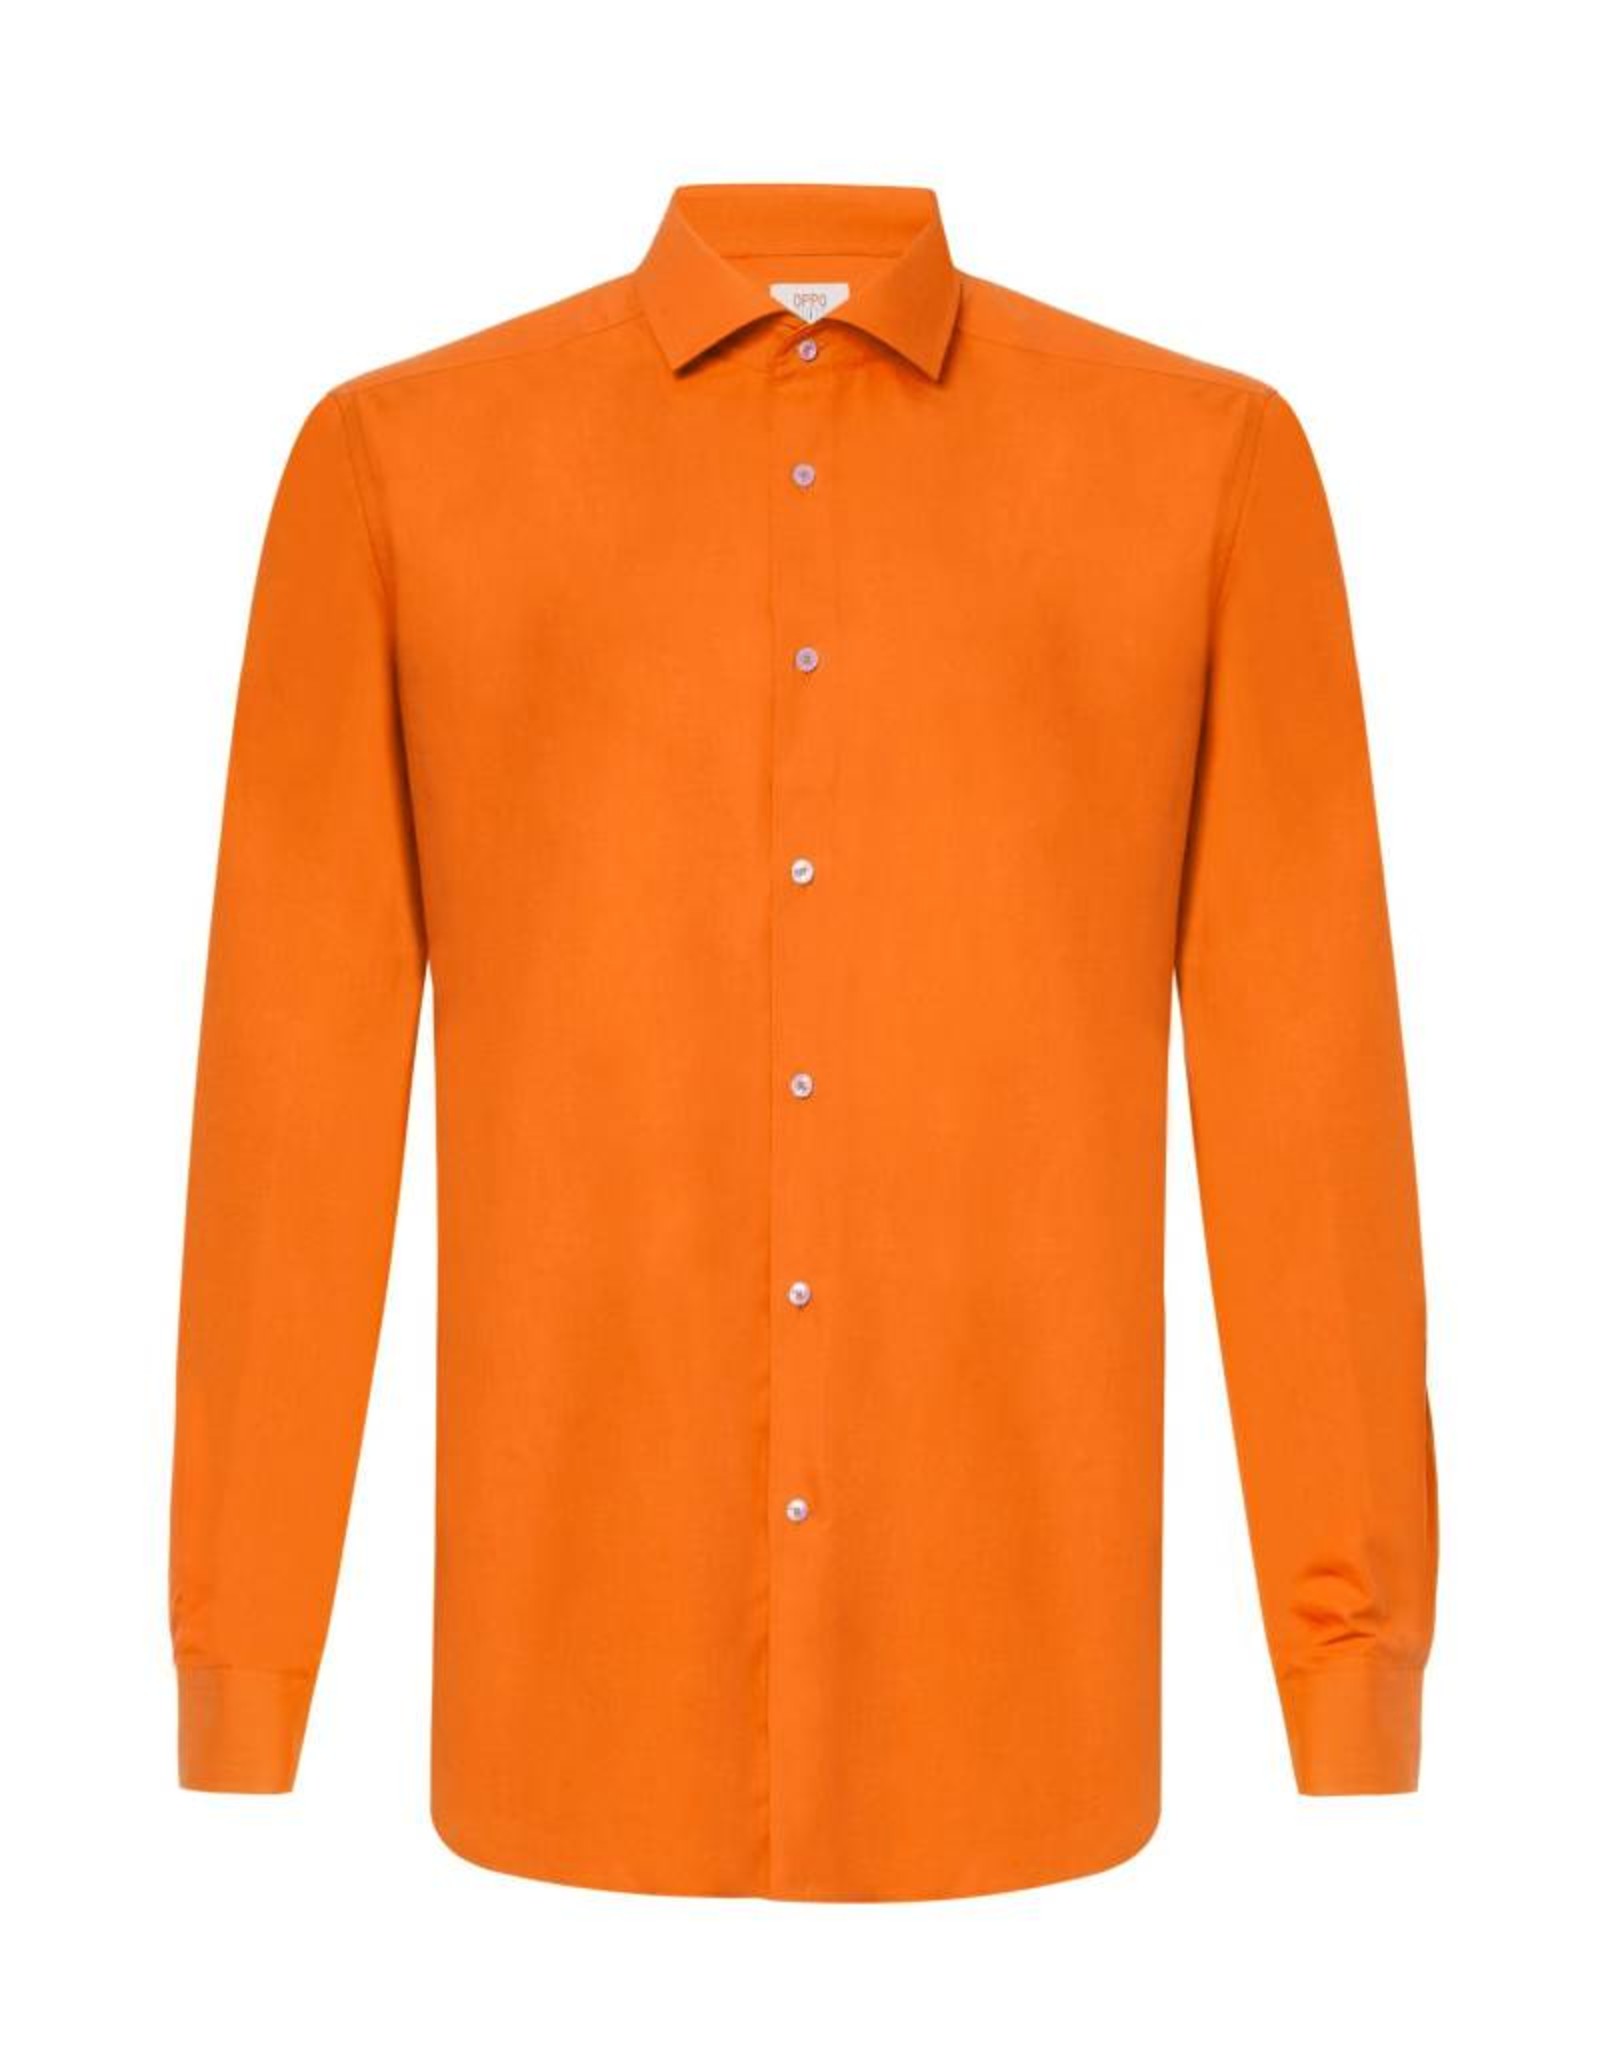 Opposuits Shirt  LS The Orange